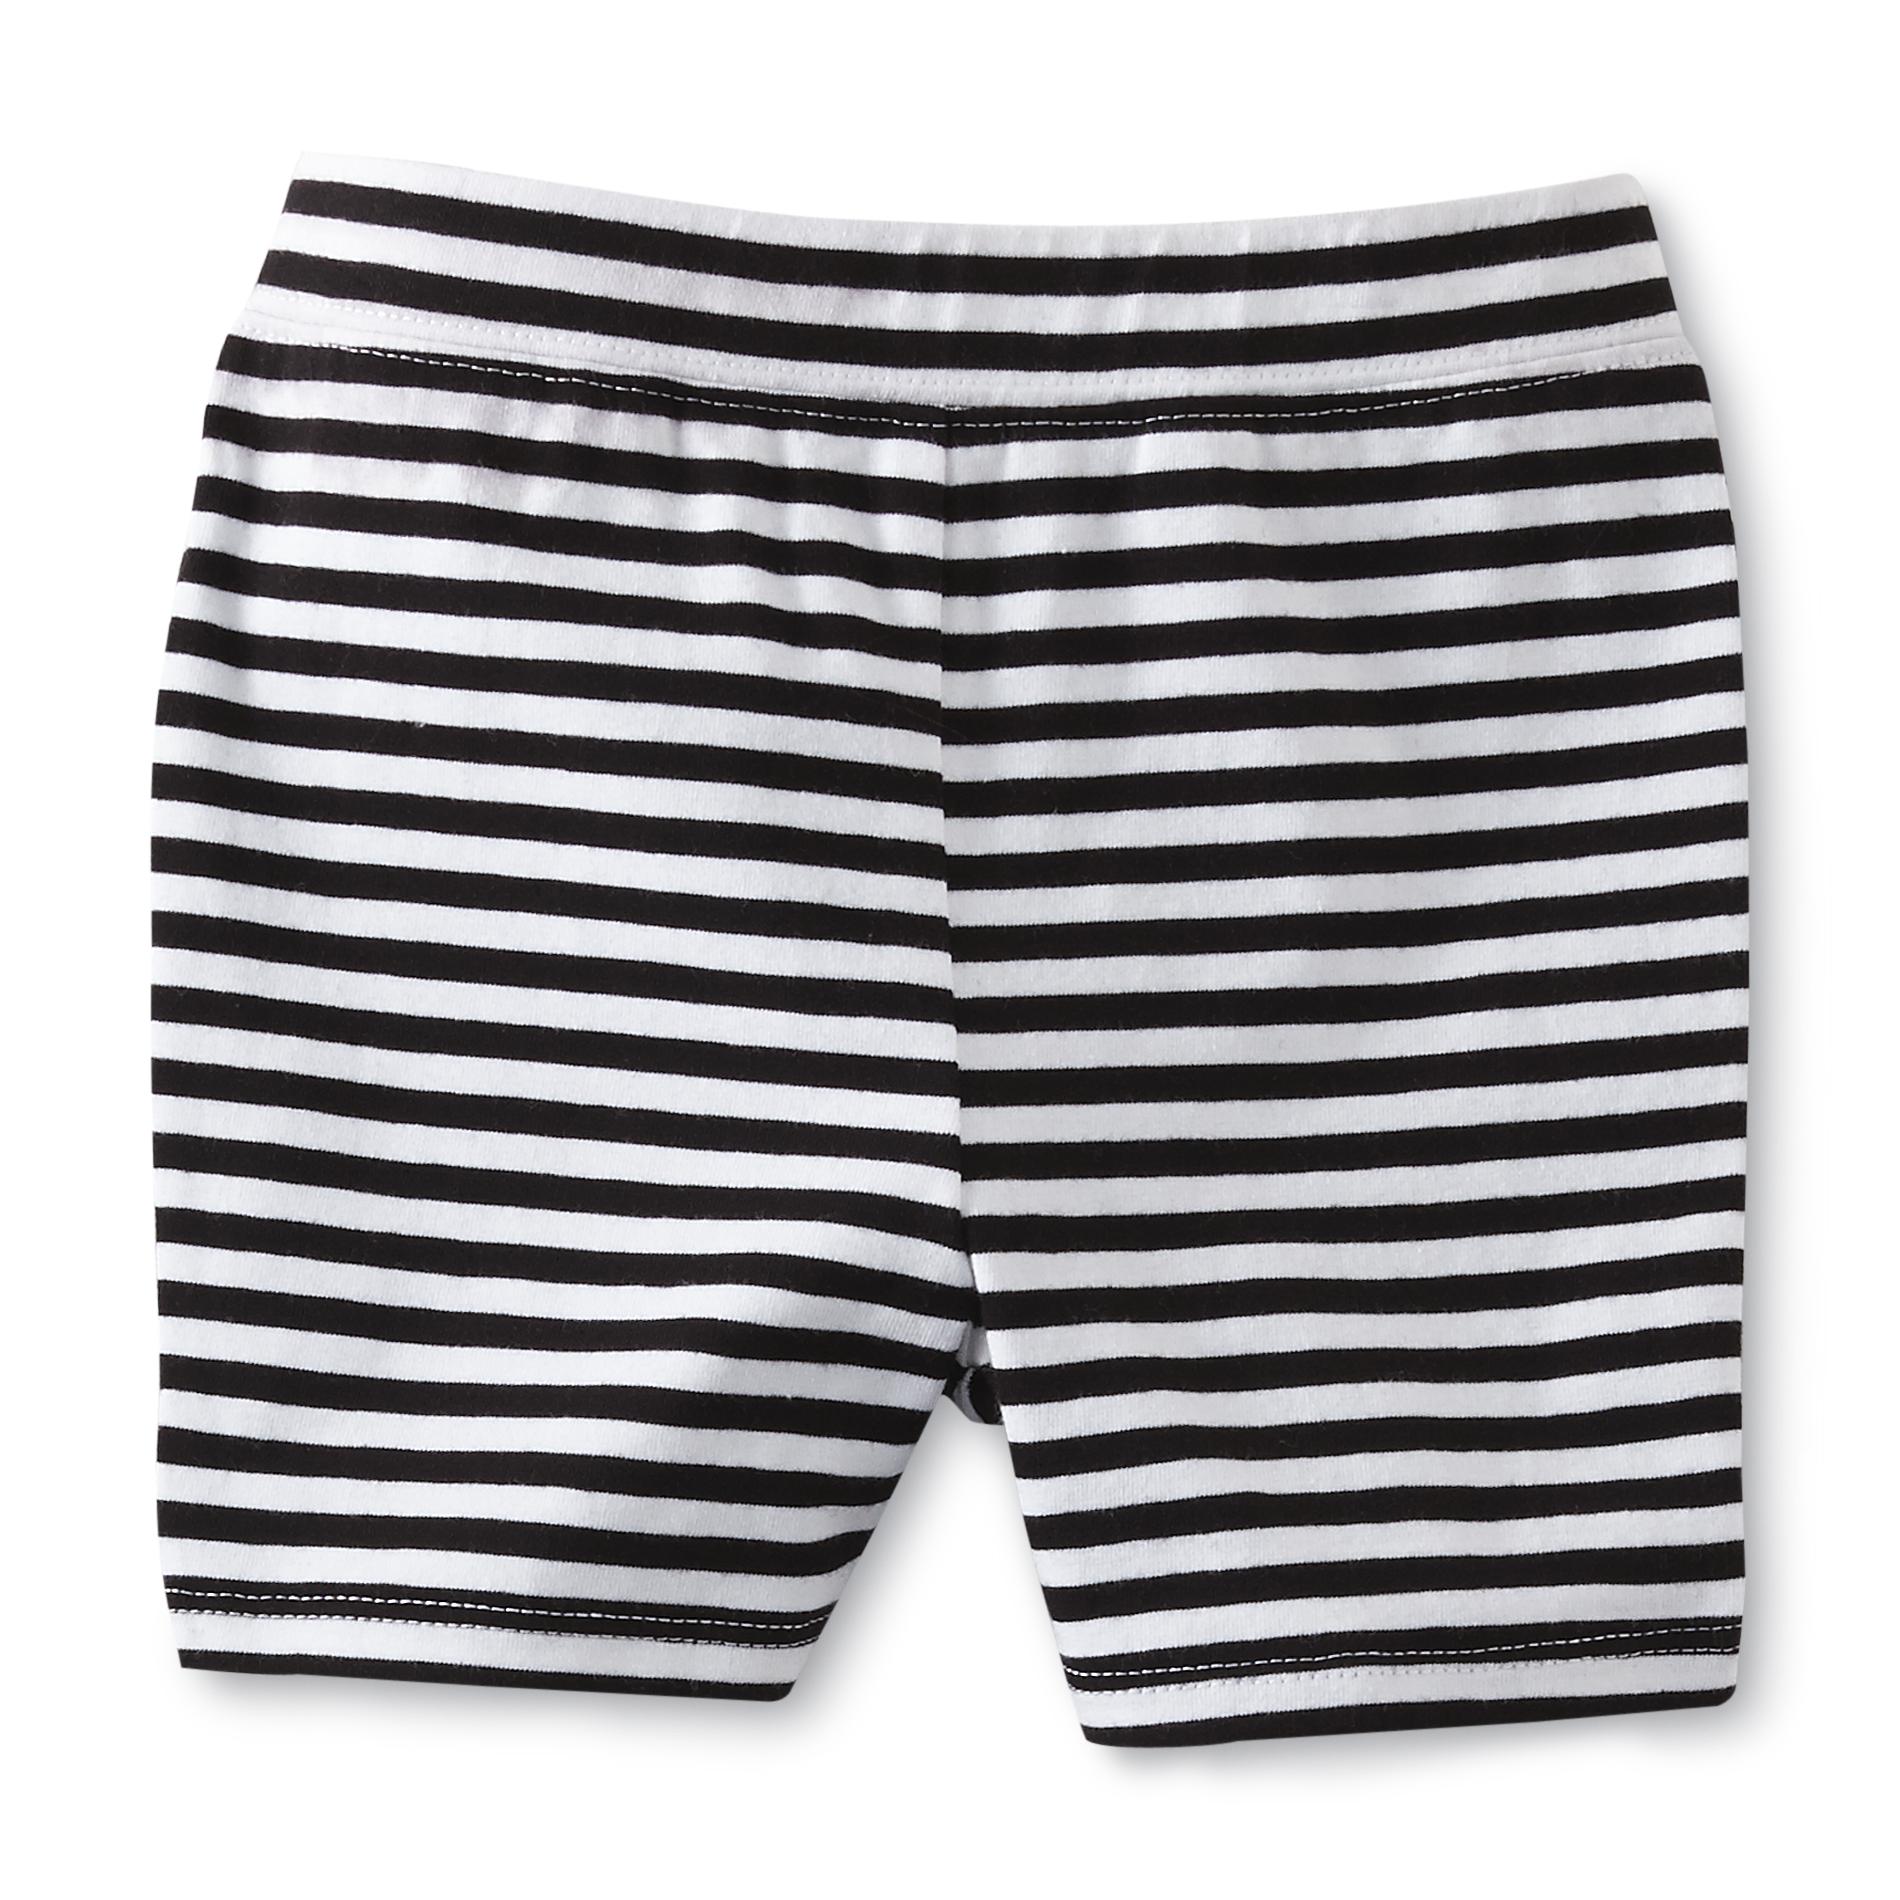 Toughskins Infant & Toddler Girl's Bike Shorts - Striped